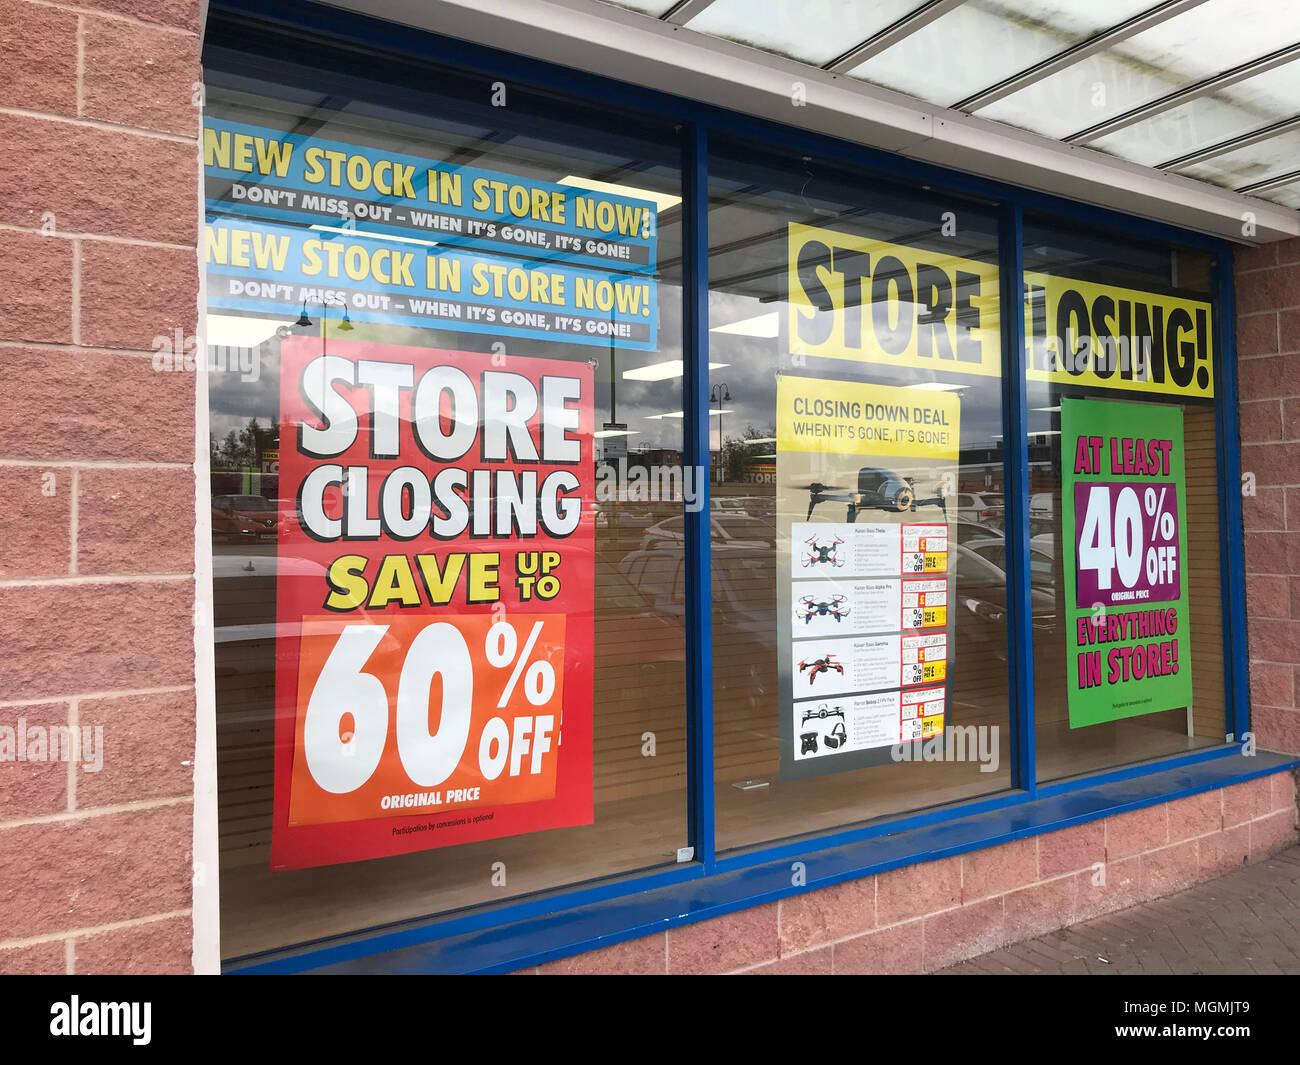 Maplins Warrington Store Closing Stock Photo